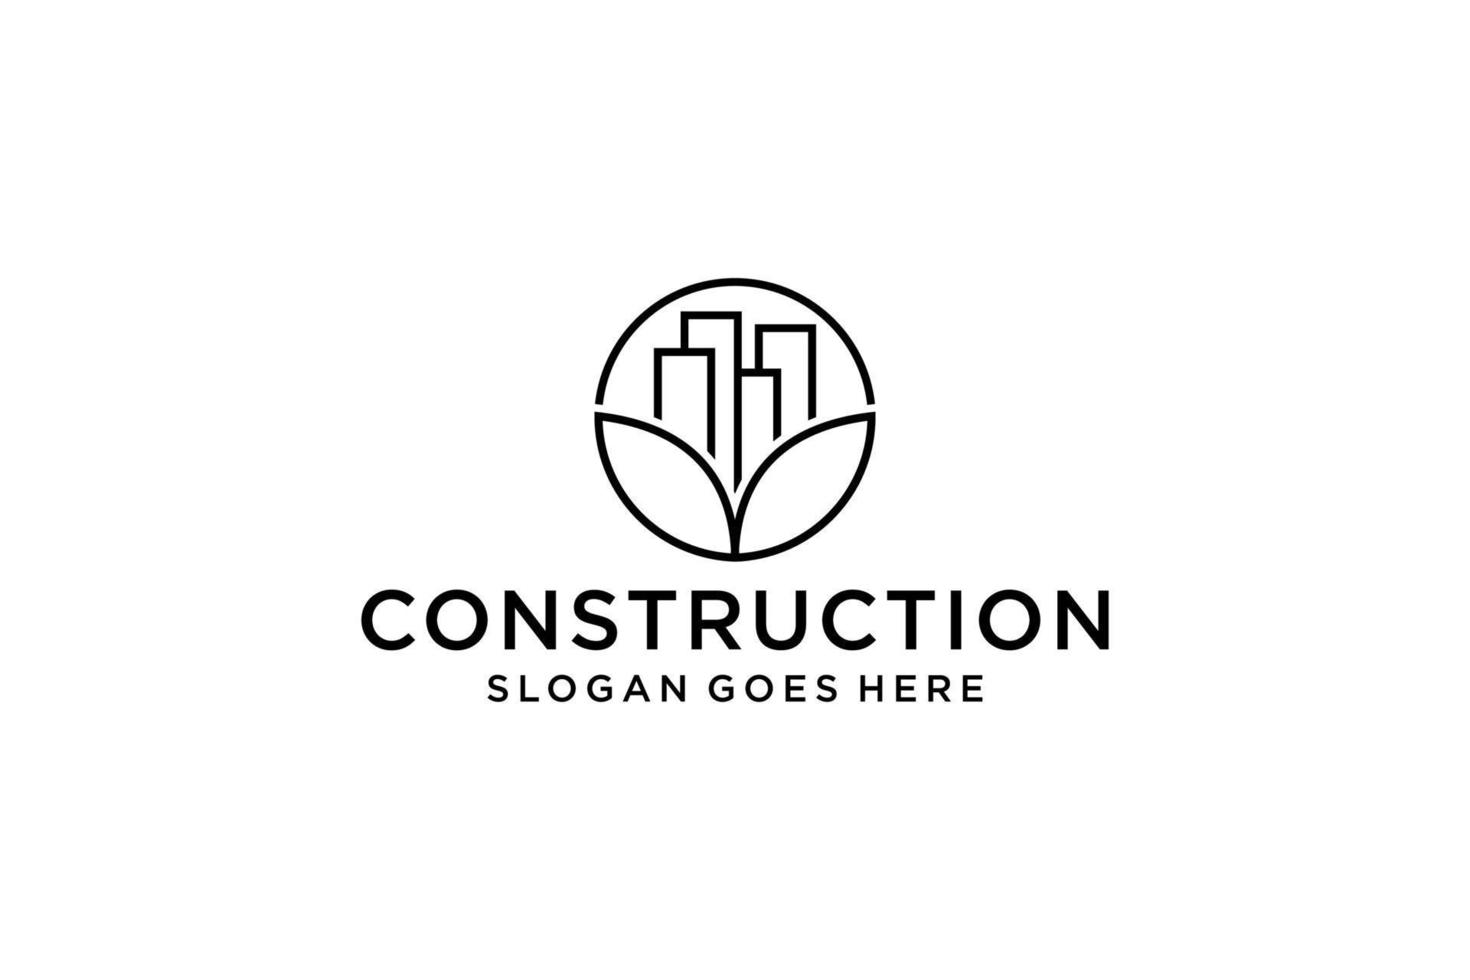 Real Estate Logo. Construction Architecture Building Logo Design Template Element. vector